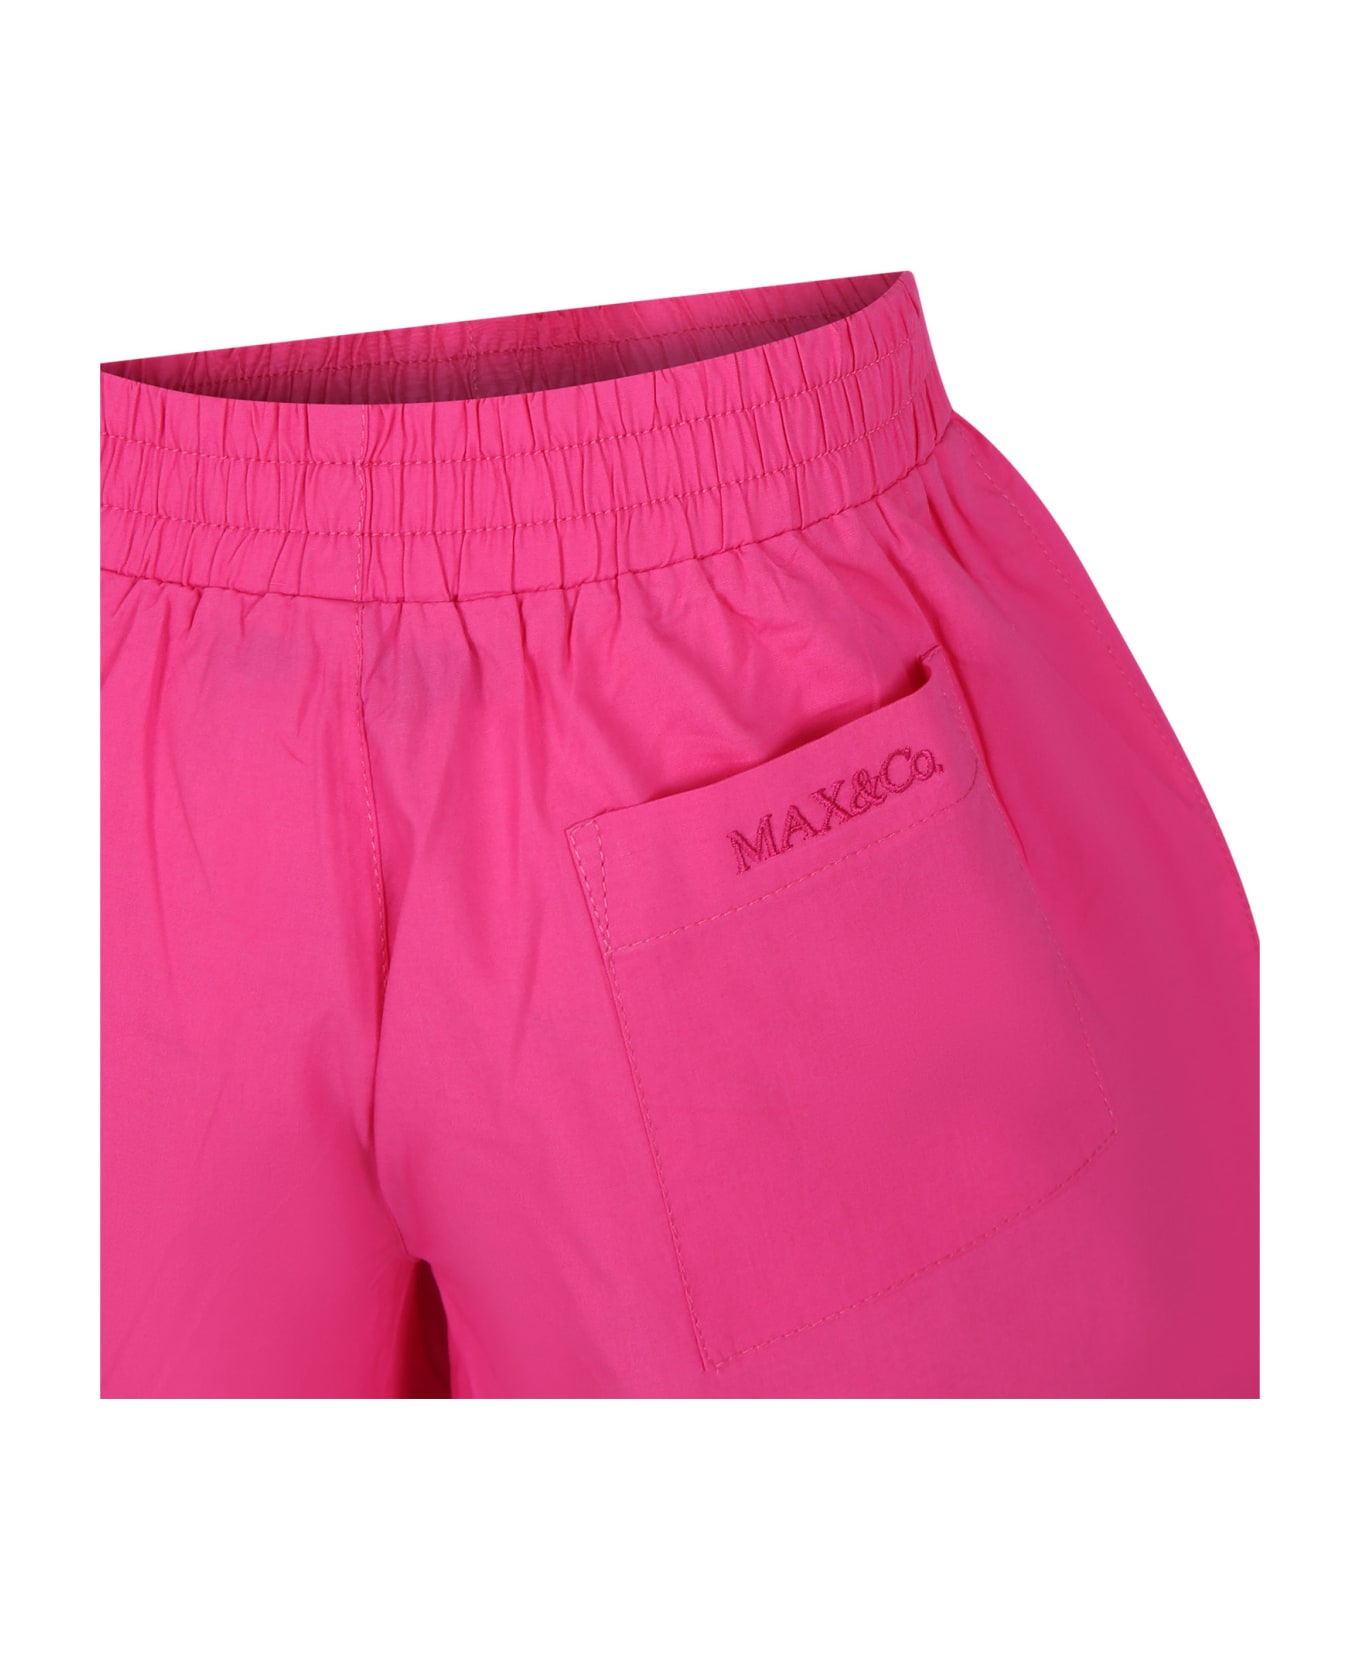 Max&Co. Fuchsia Shorts For Girl With Logo - Fuchsia